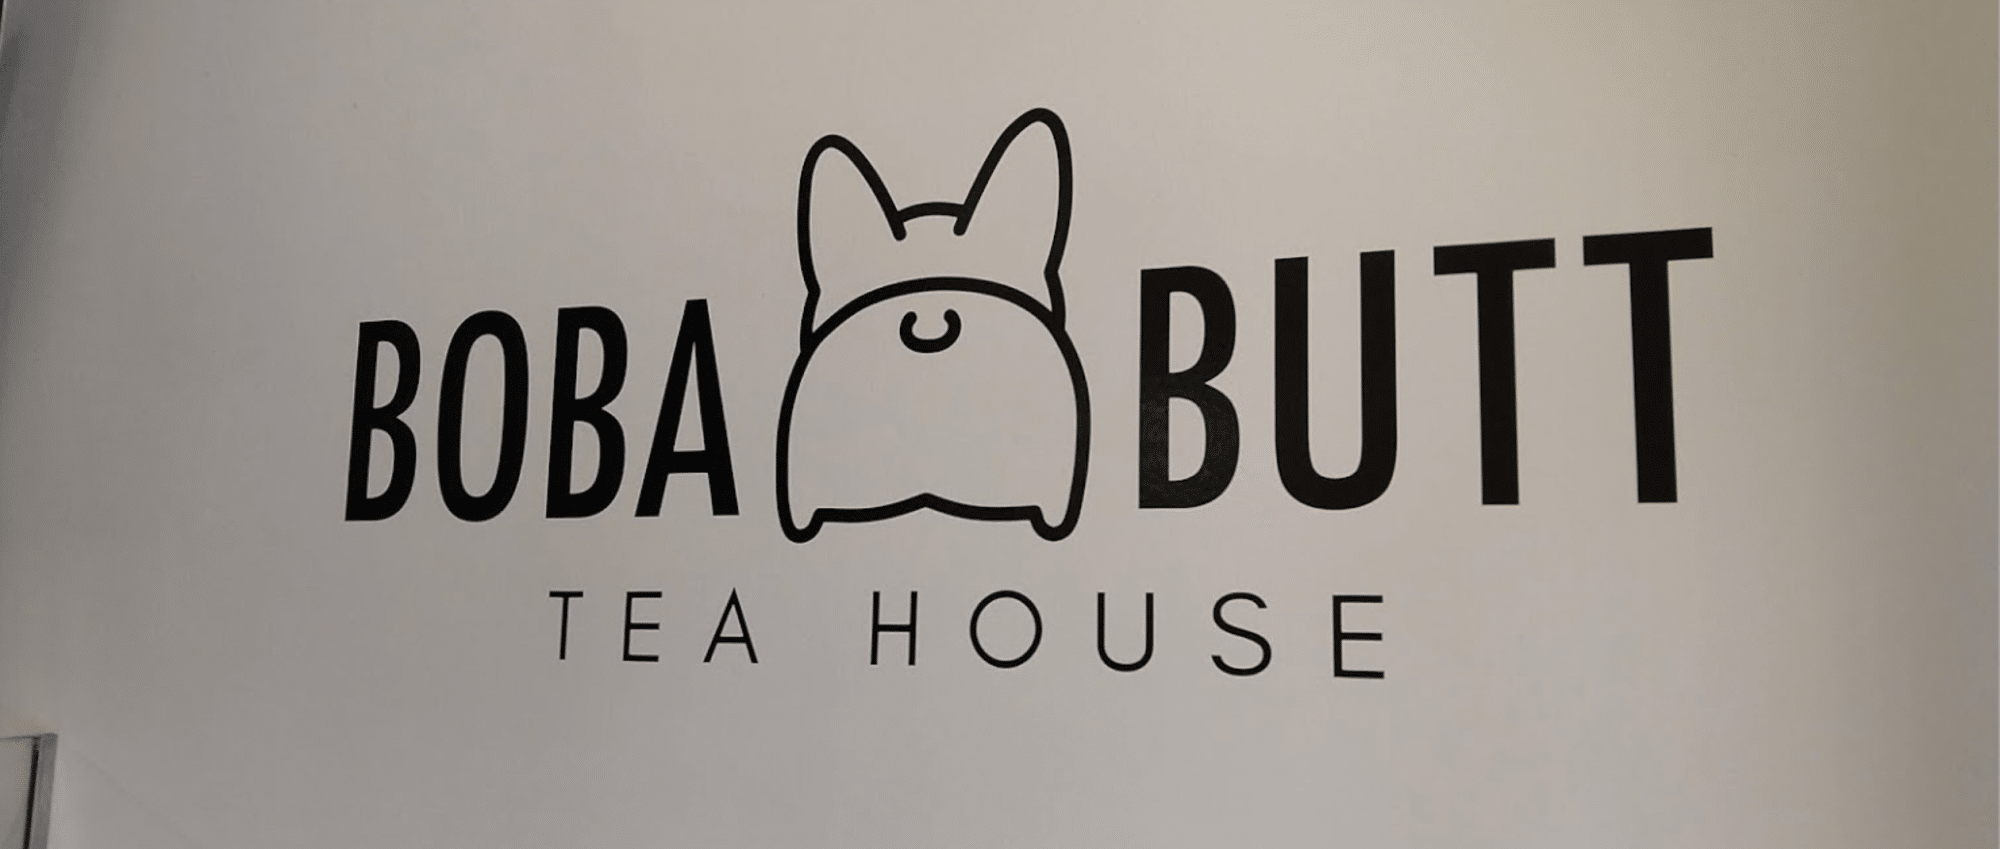 Boba Butt Tea House